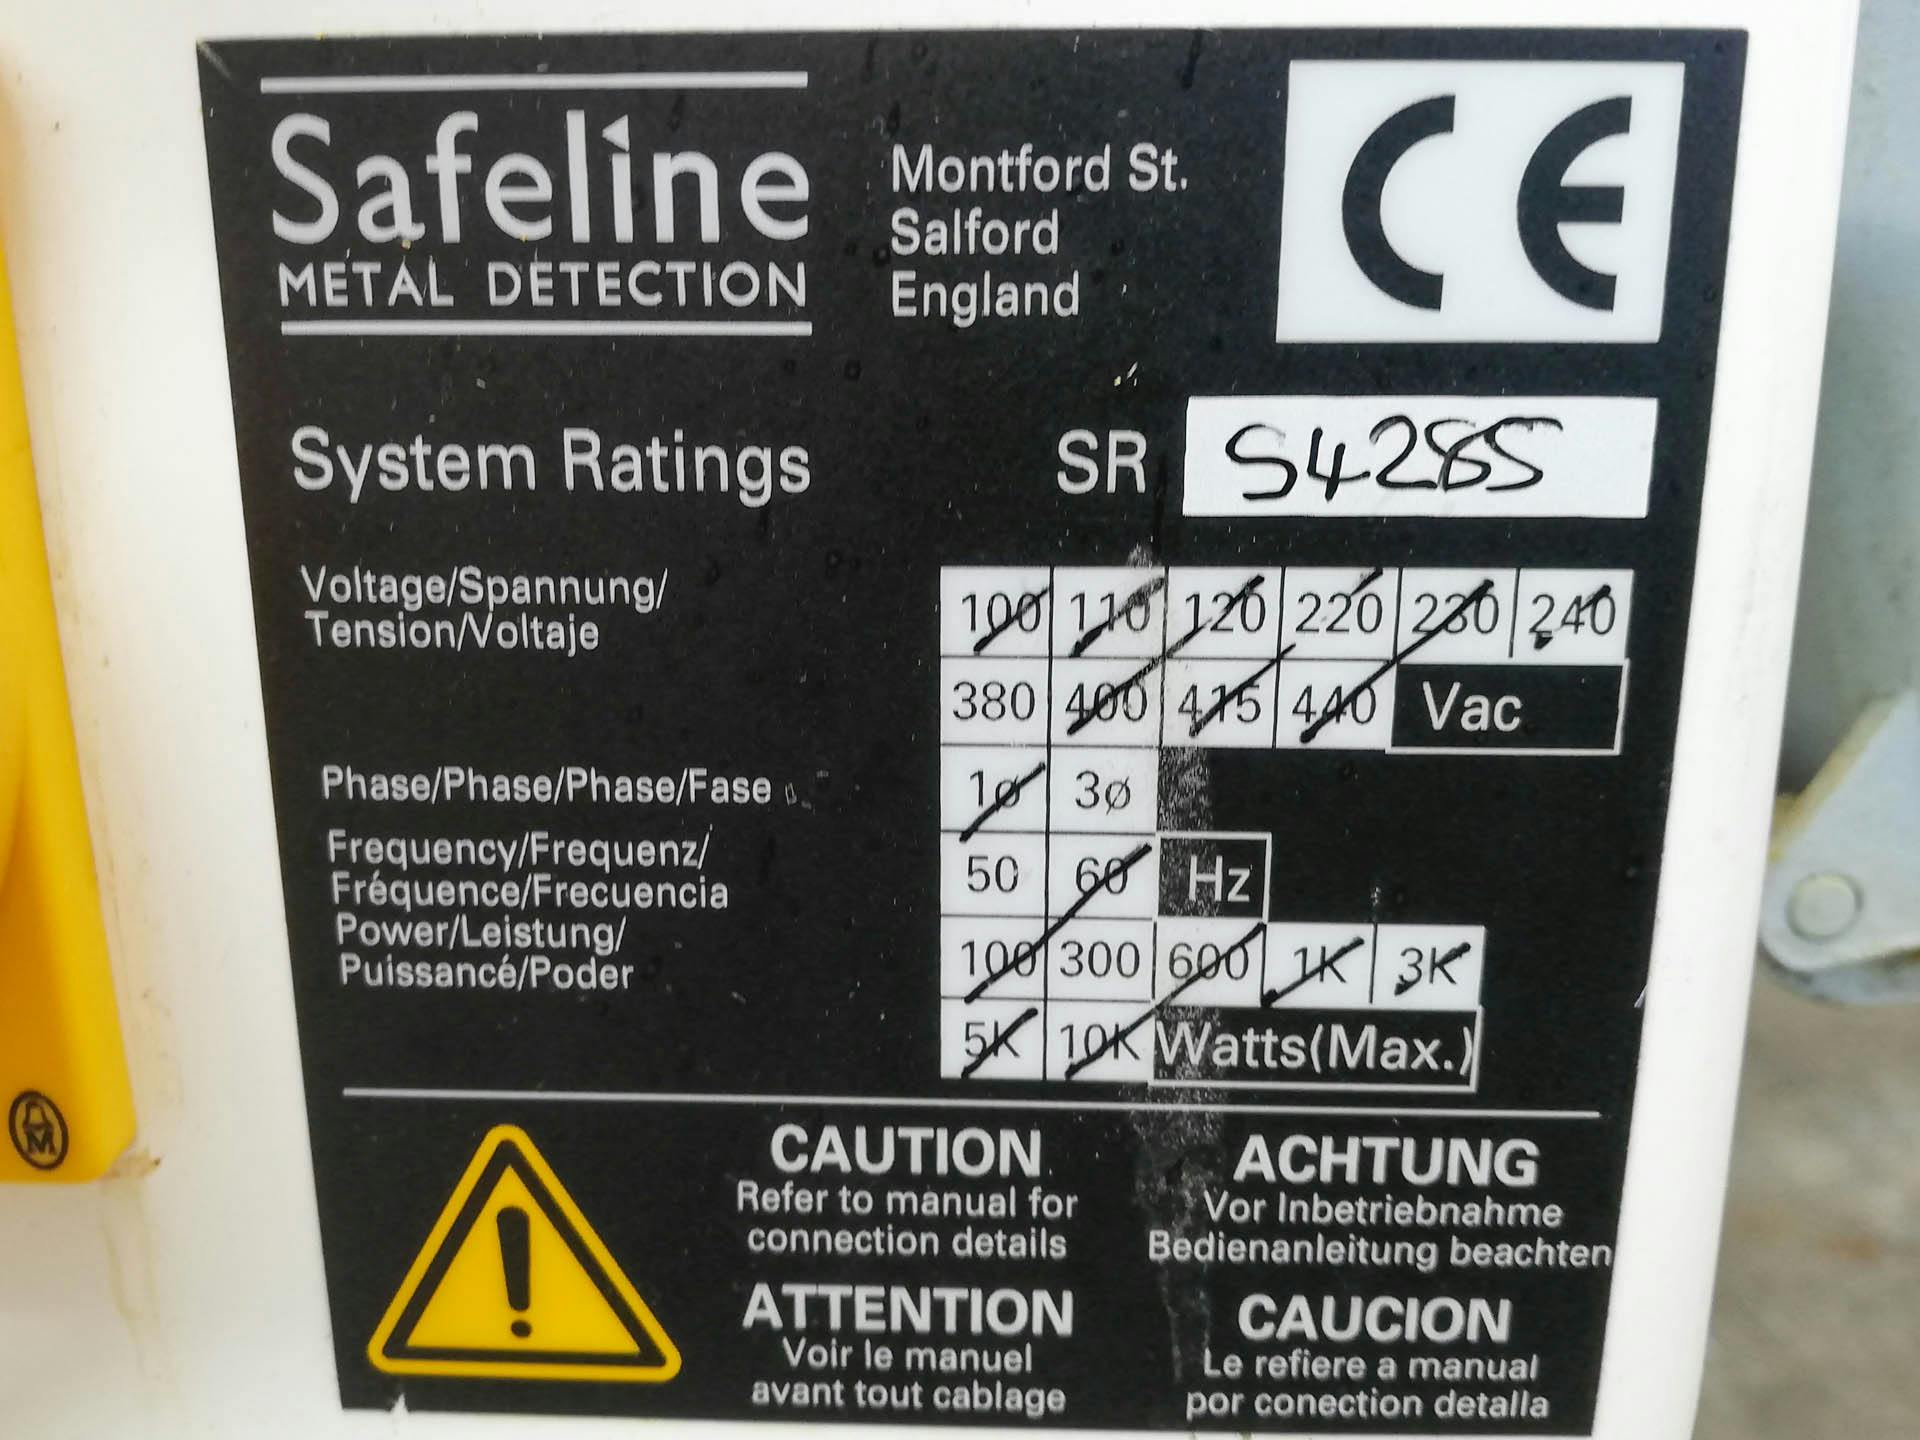 Safeline Uk Signature 2 - Detetor de metais - image 5